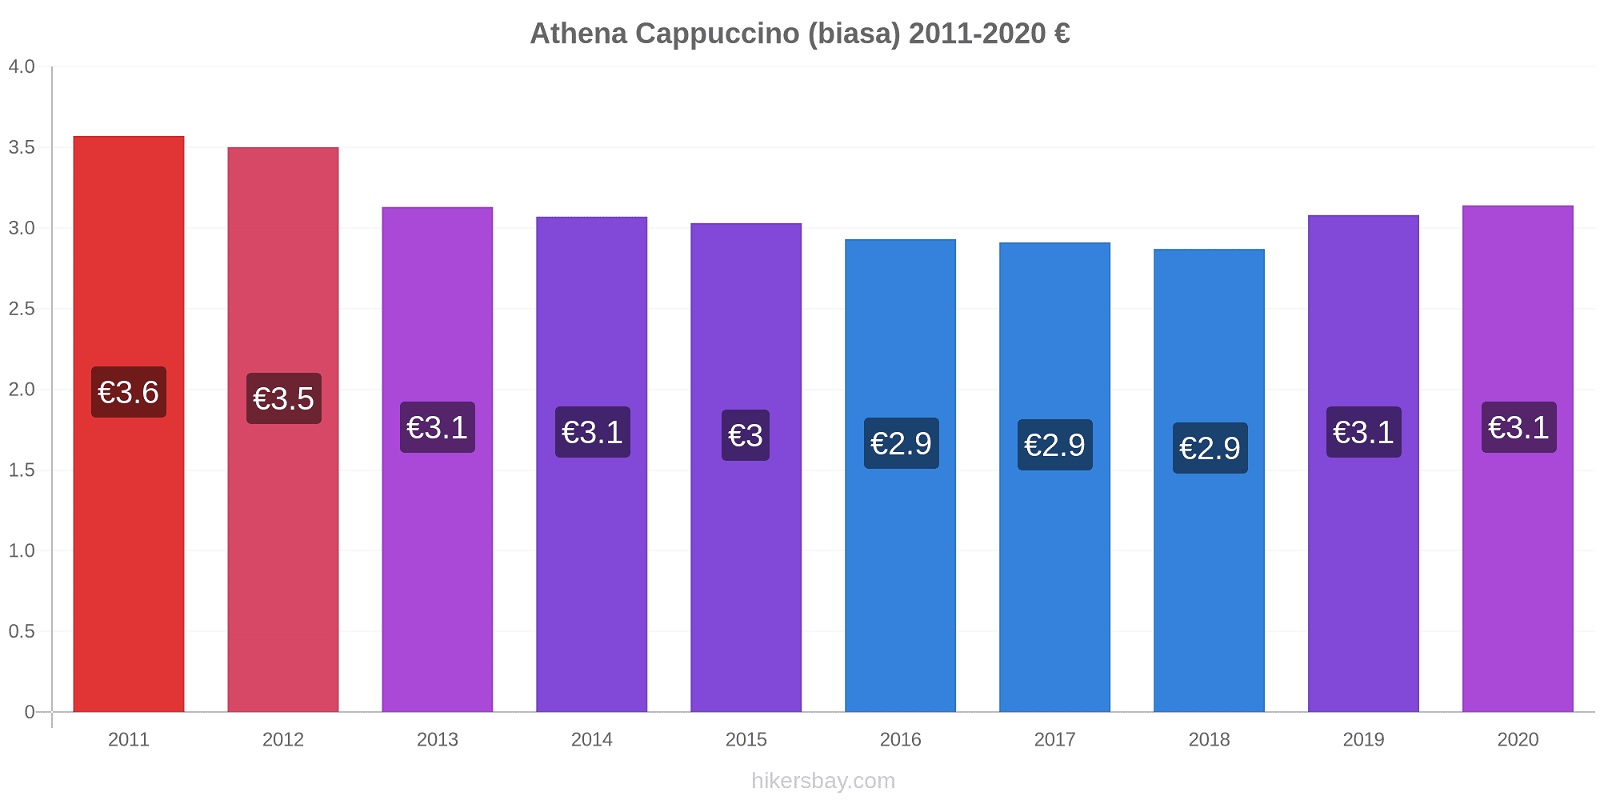 Athena perubahan harga Cappuccino (biasa) hikersbay.com